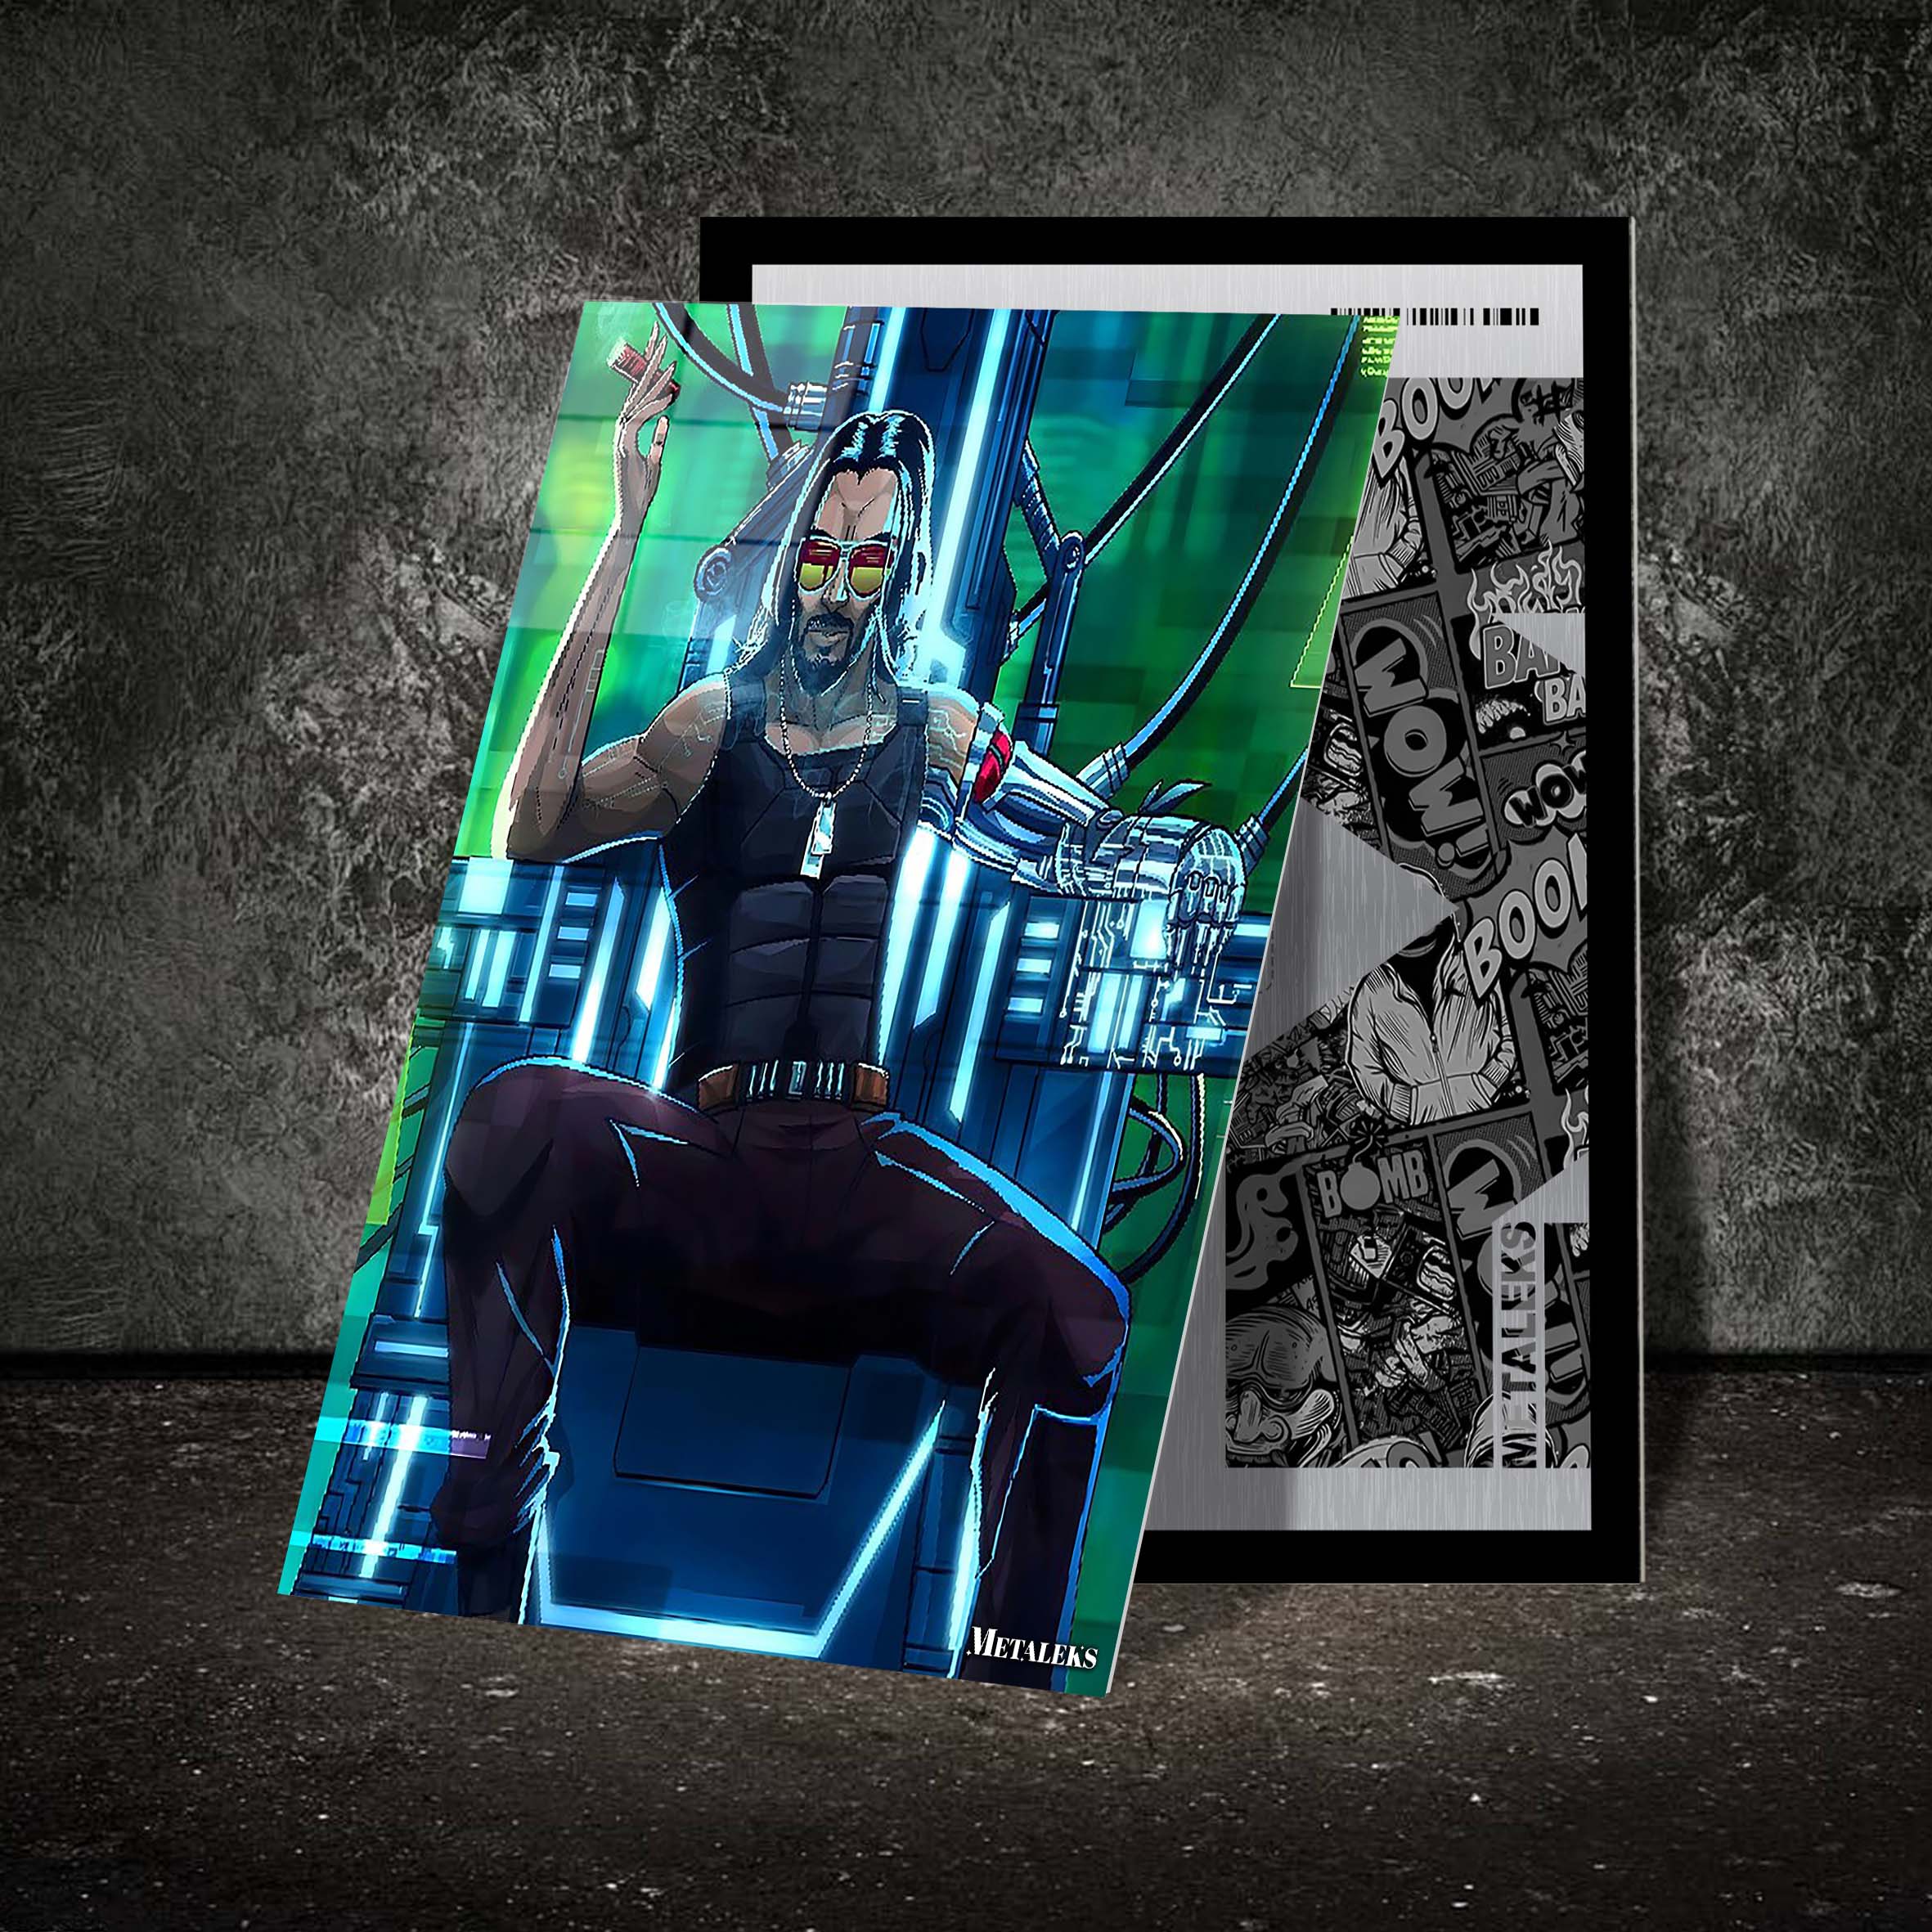 Johny Silverhand Cyberpunk-designed by @owl design